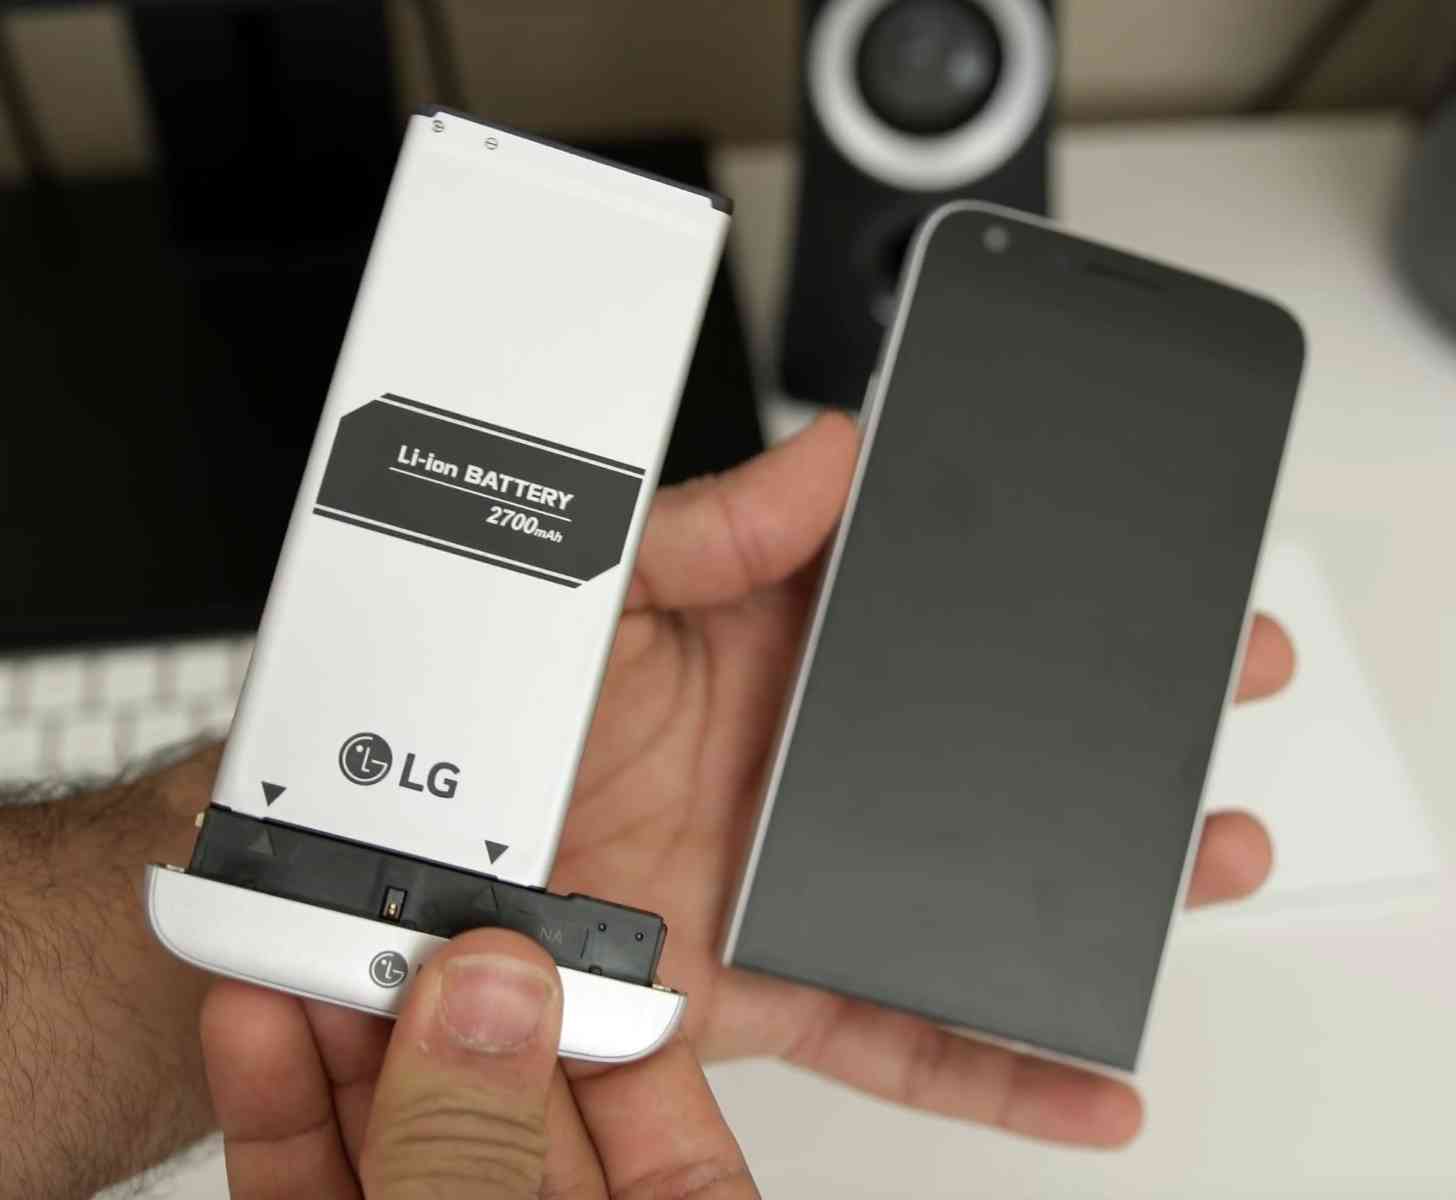 LG G5 module hands-on